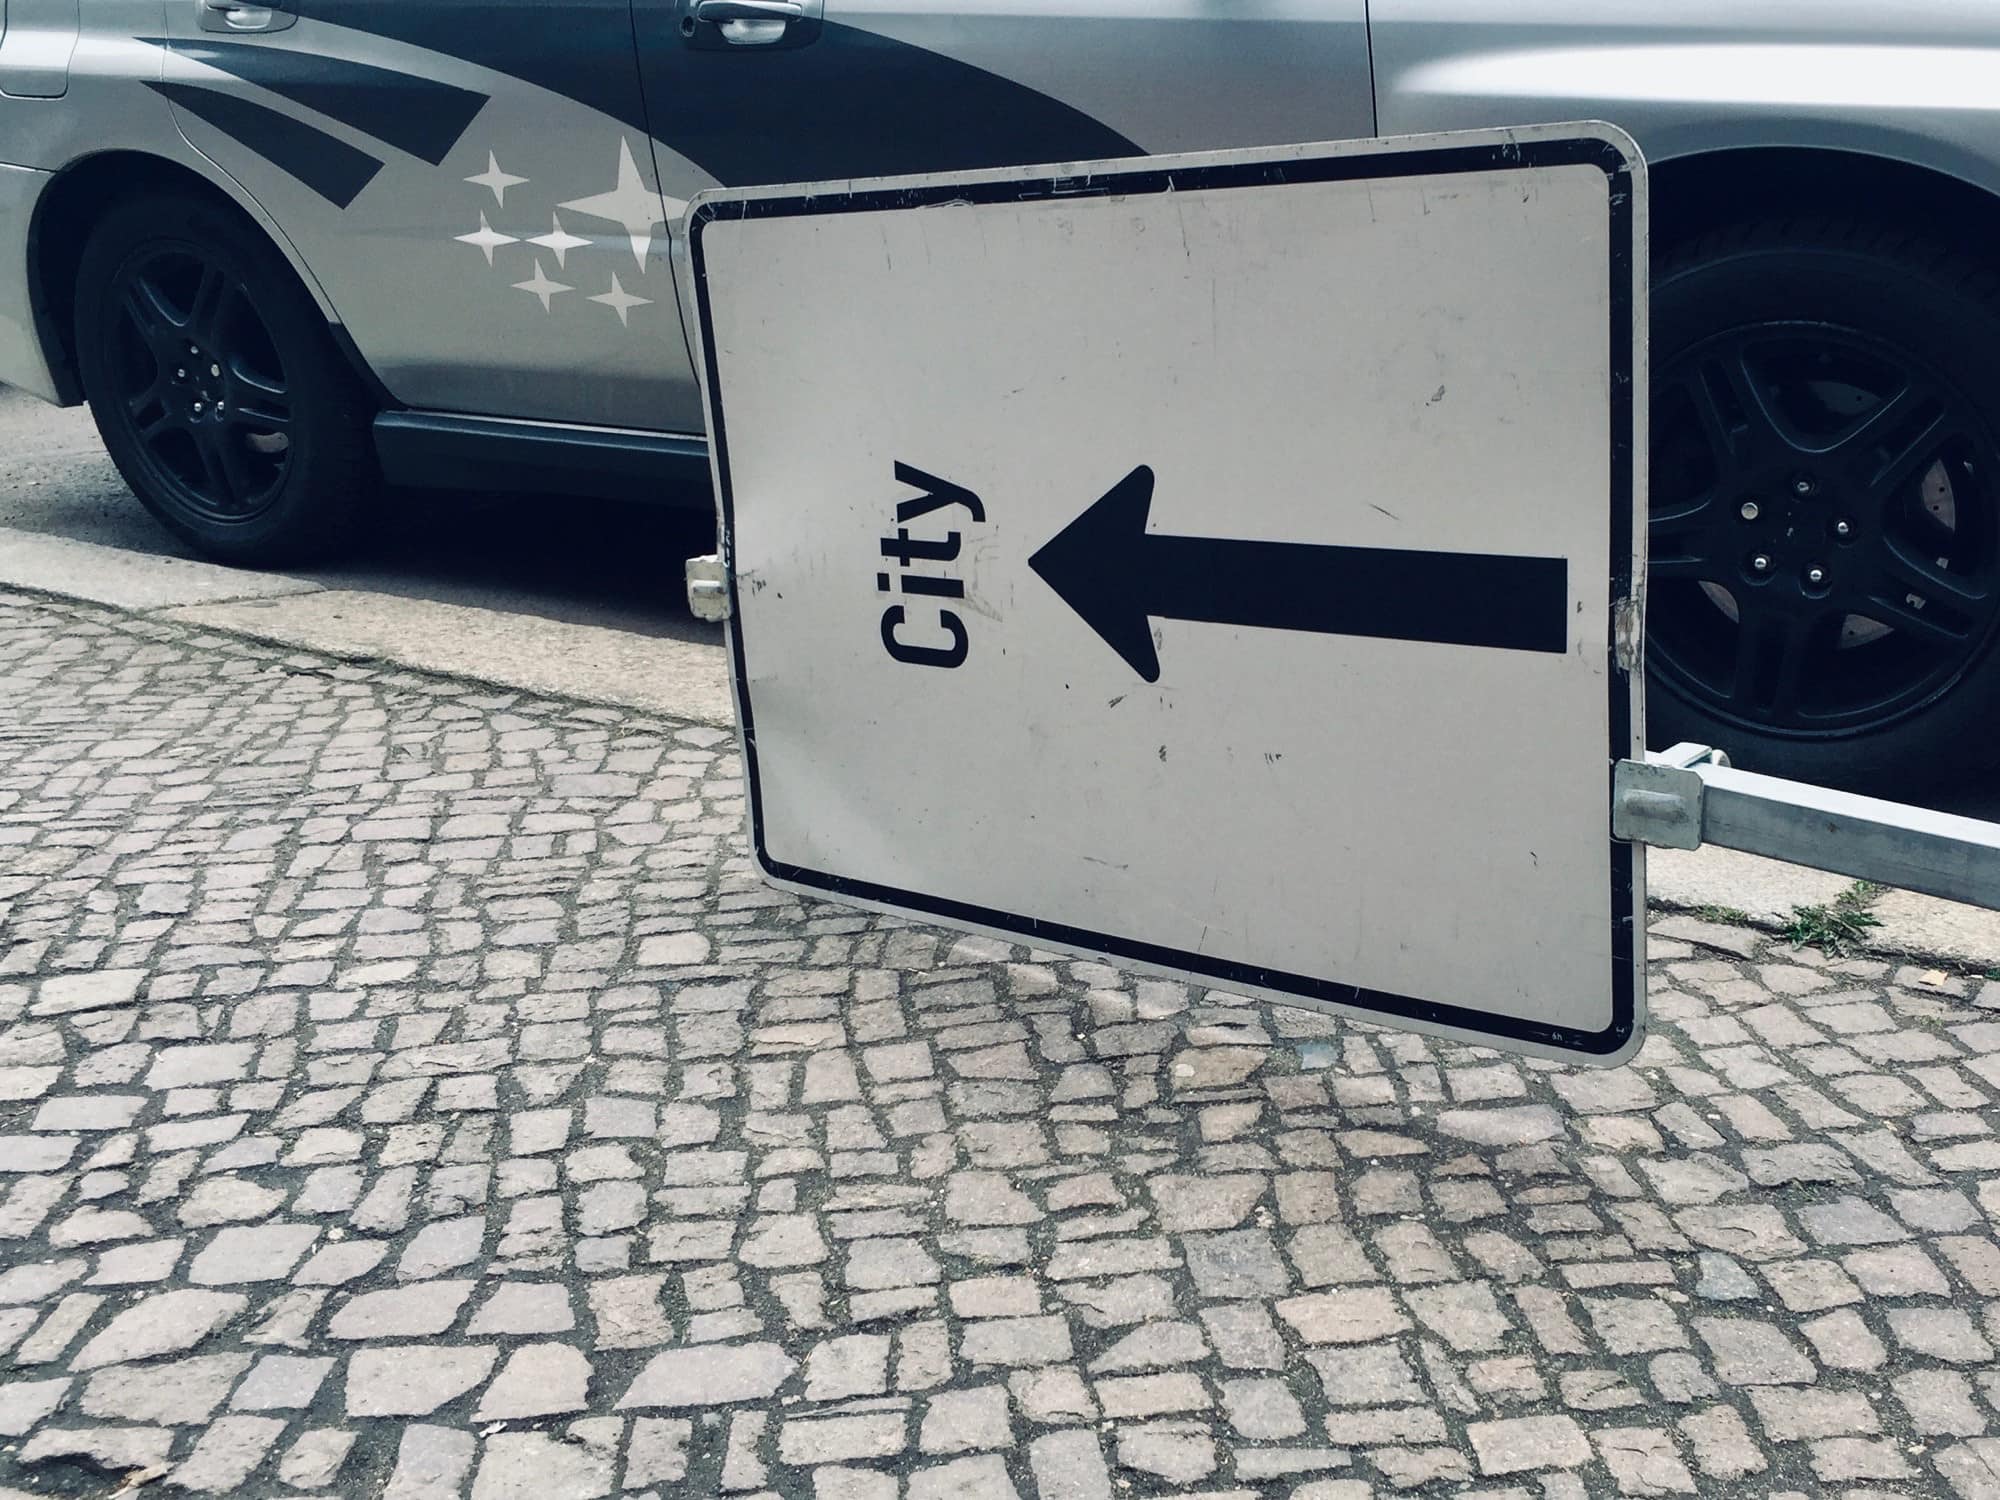 Shortcut sign.